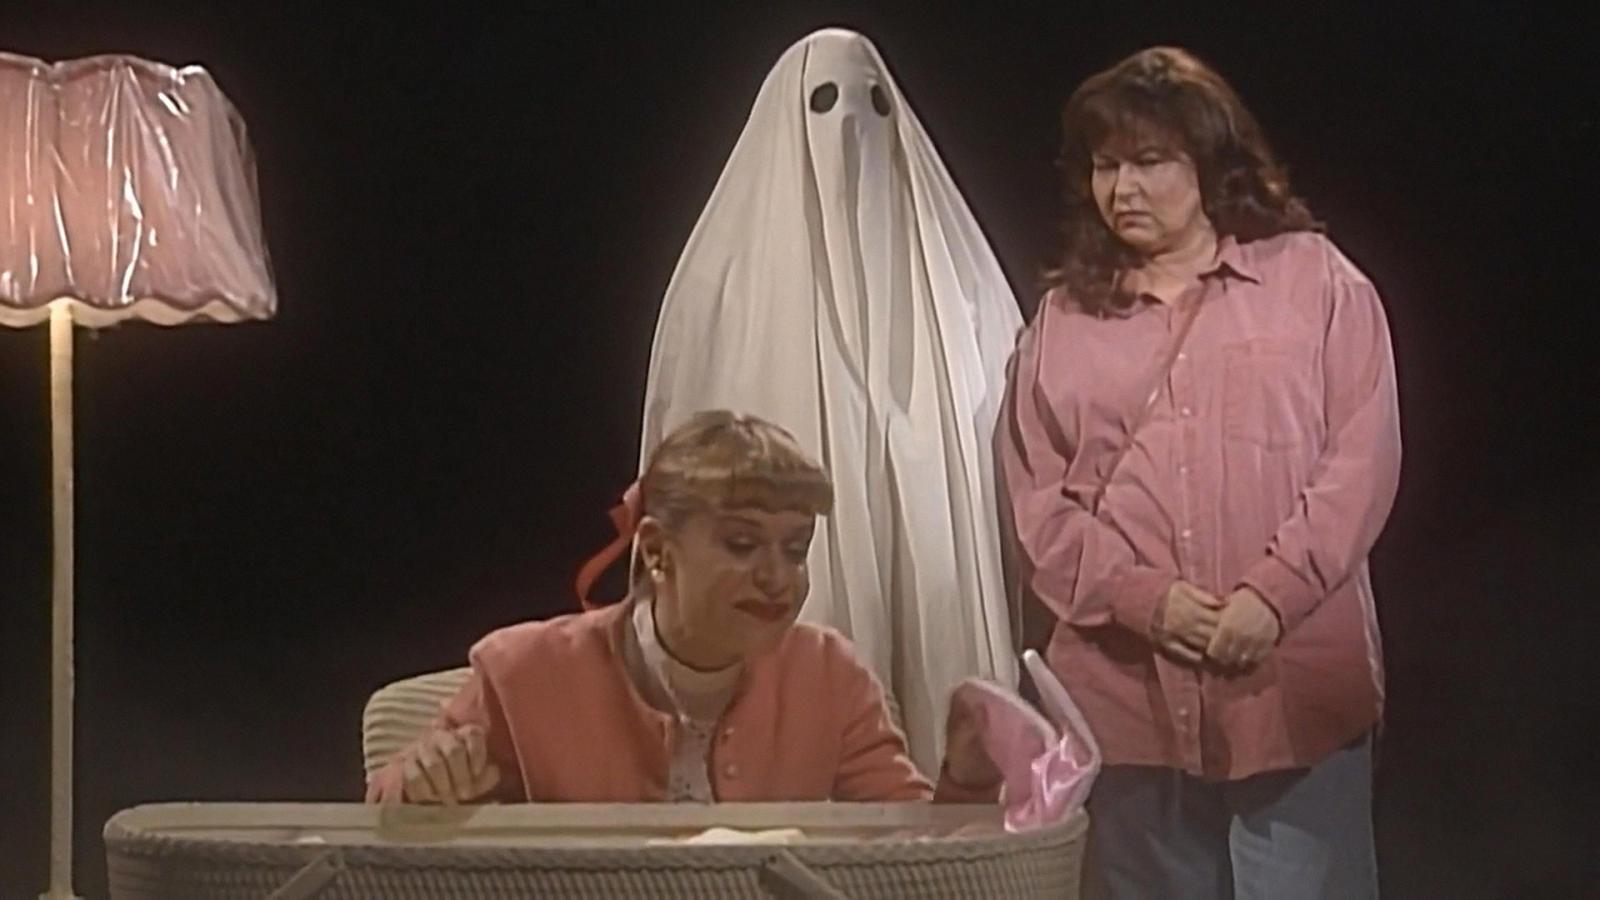 Reddit's List of 10 Greatest Halloween TV Episodes - image 6